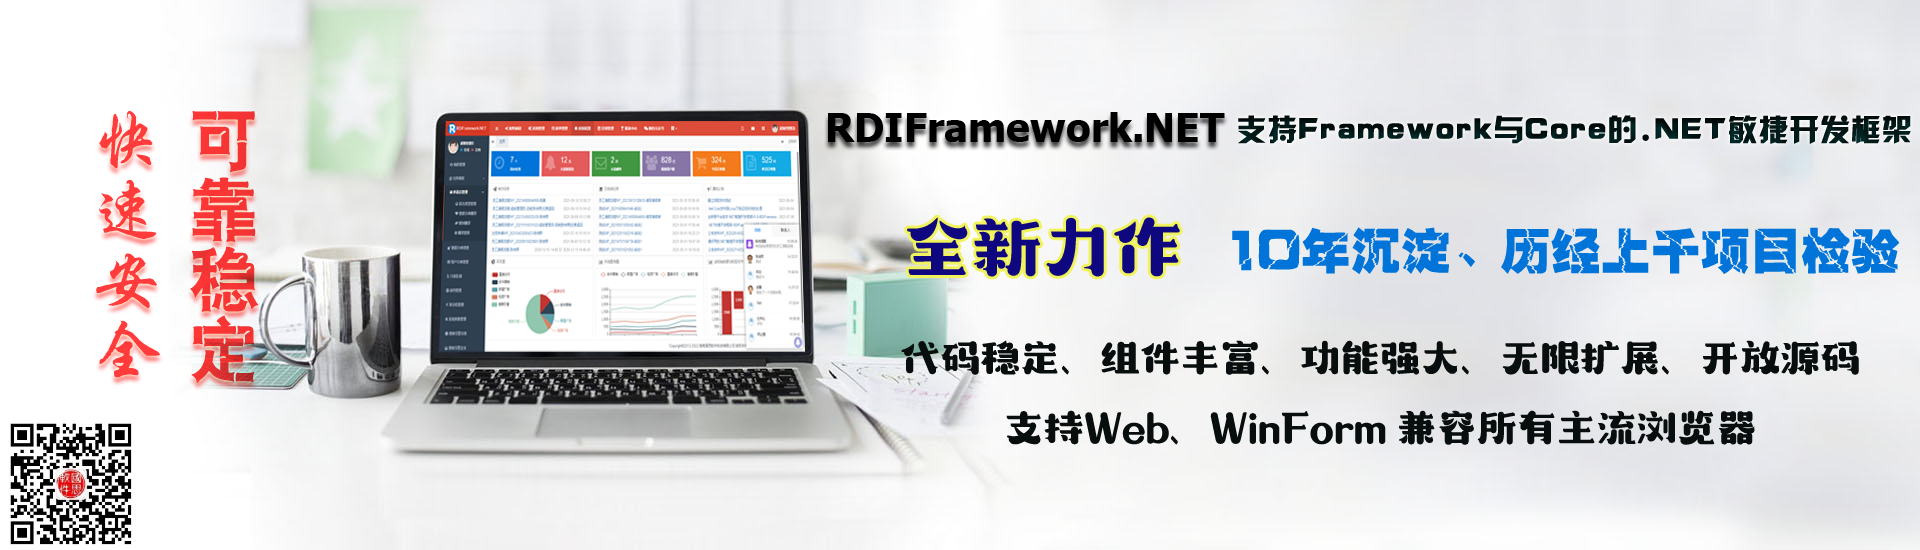 .NET敏捷开发框架-RDIFramework.NET V5.1发布